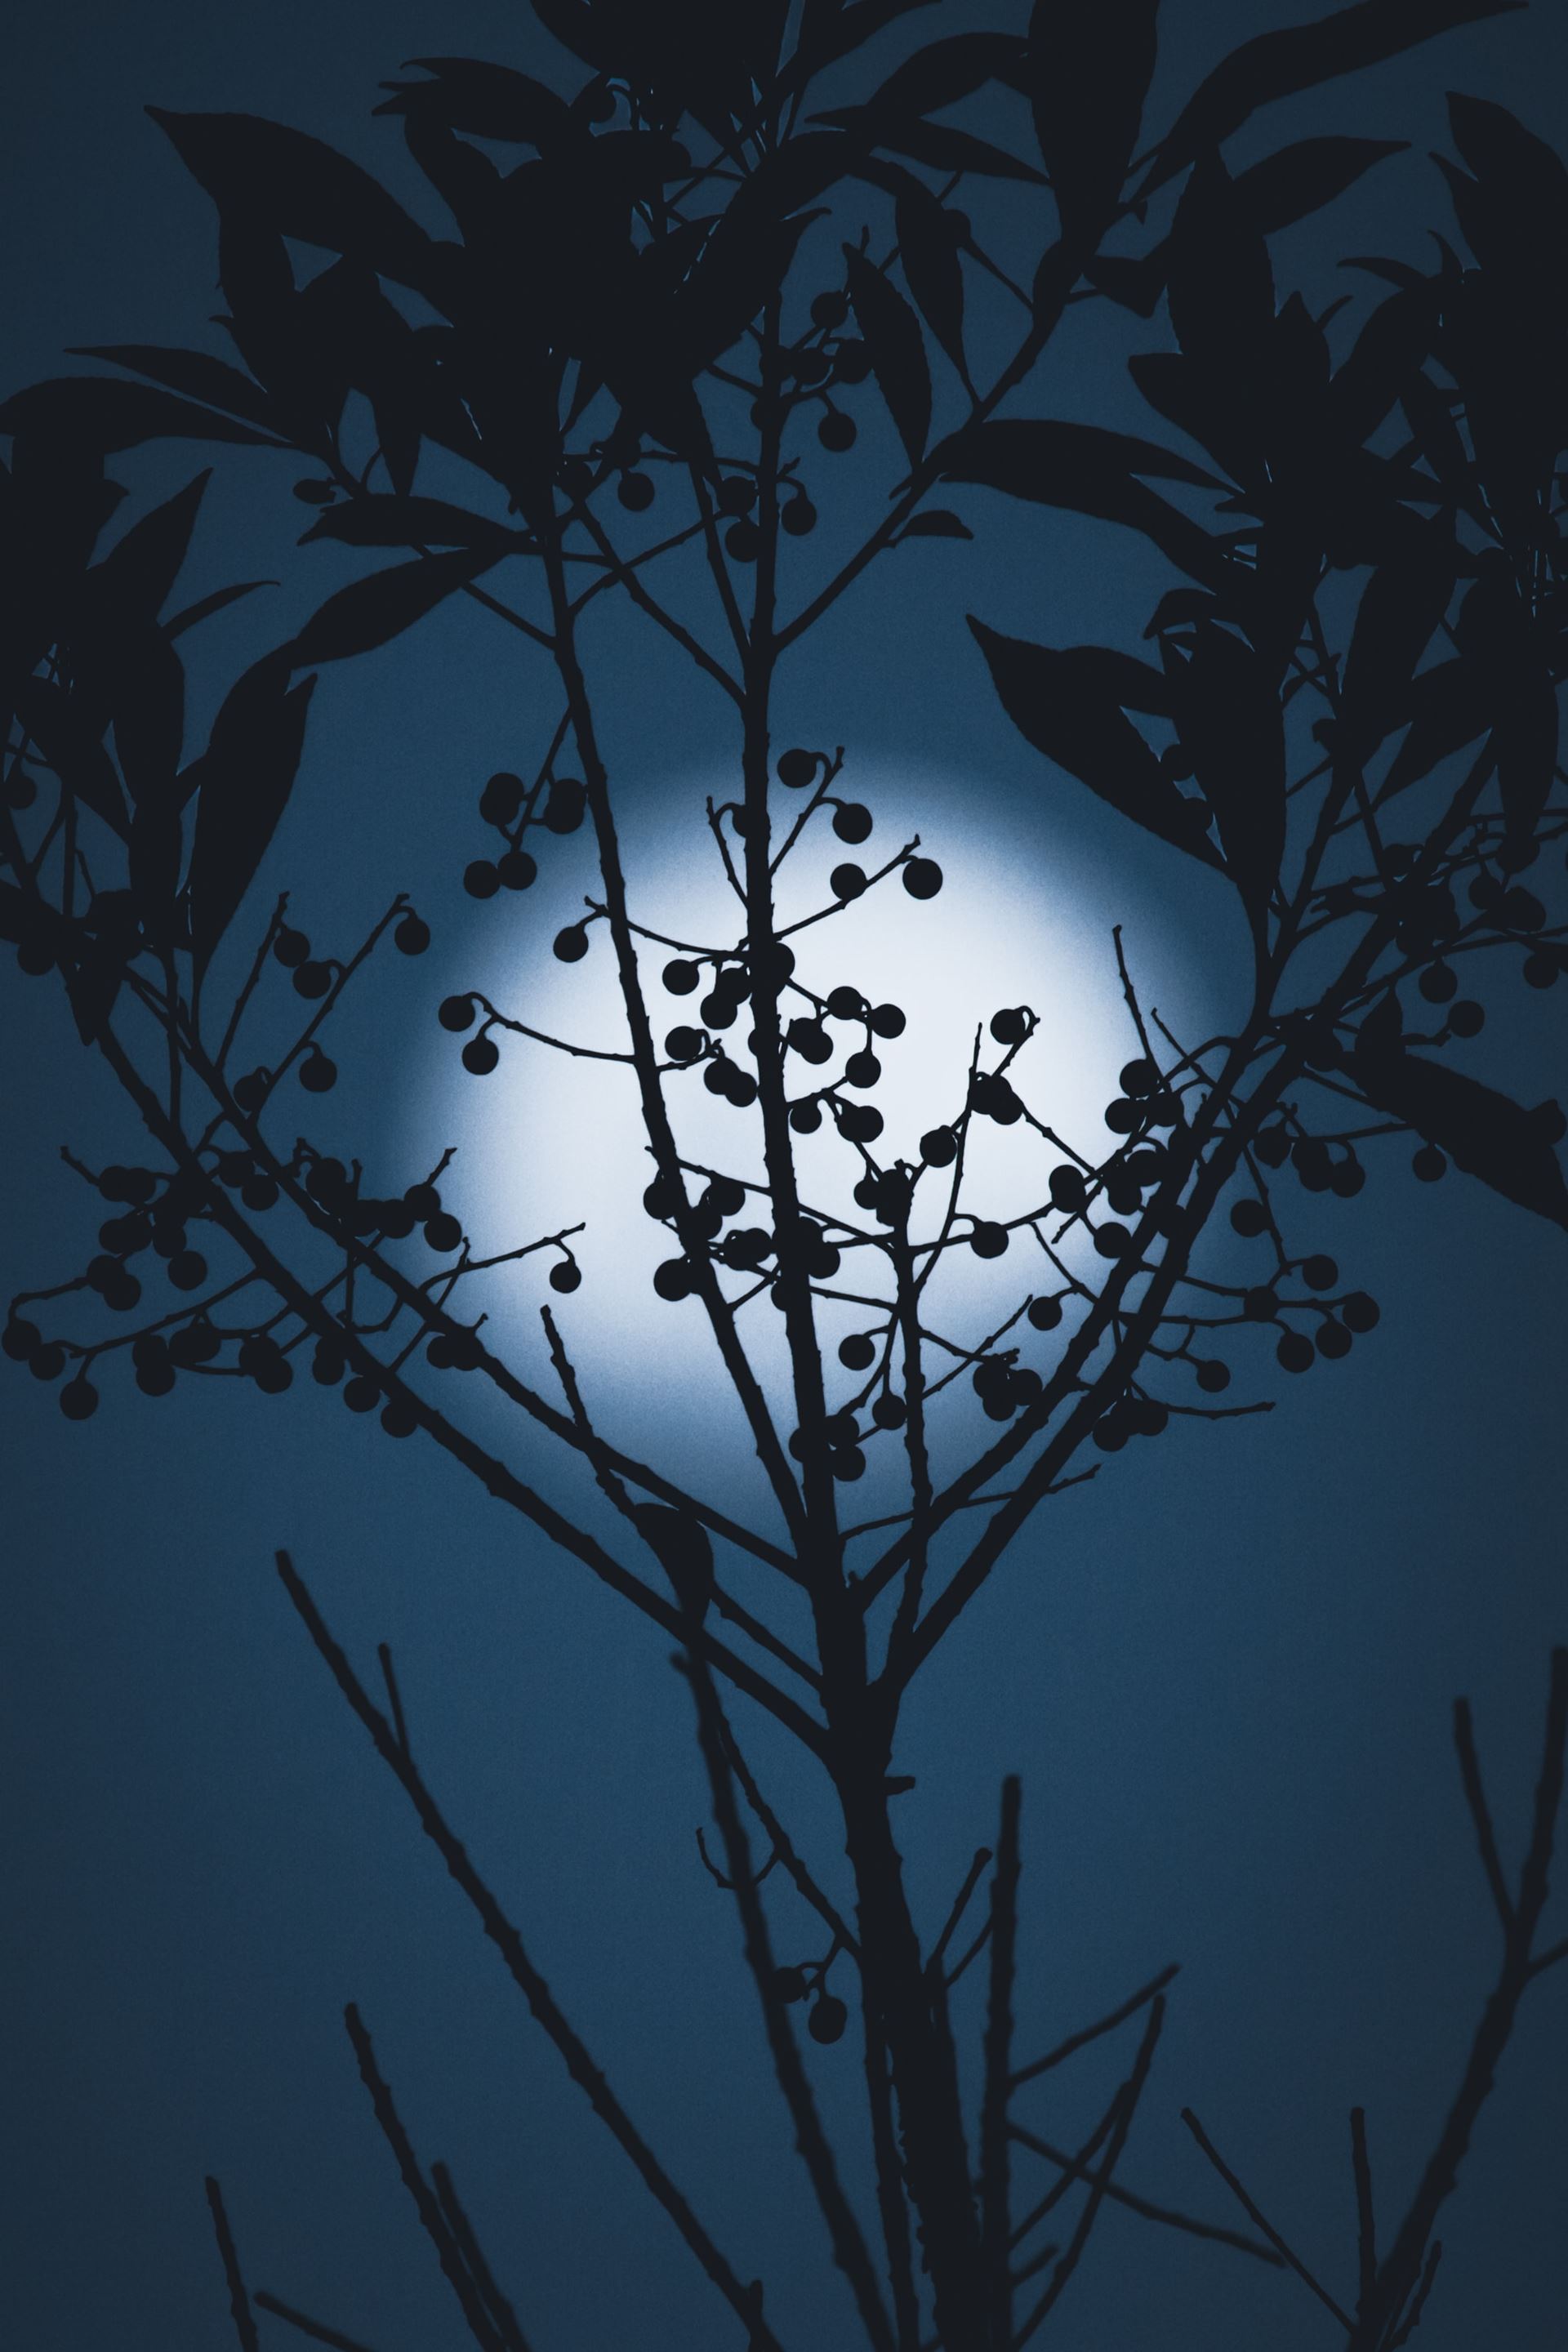 a moon rising behind a tree